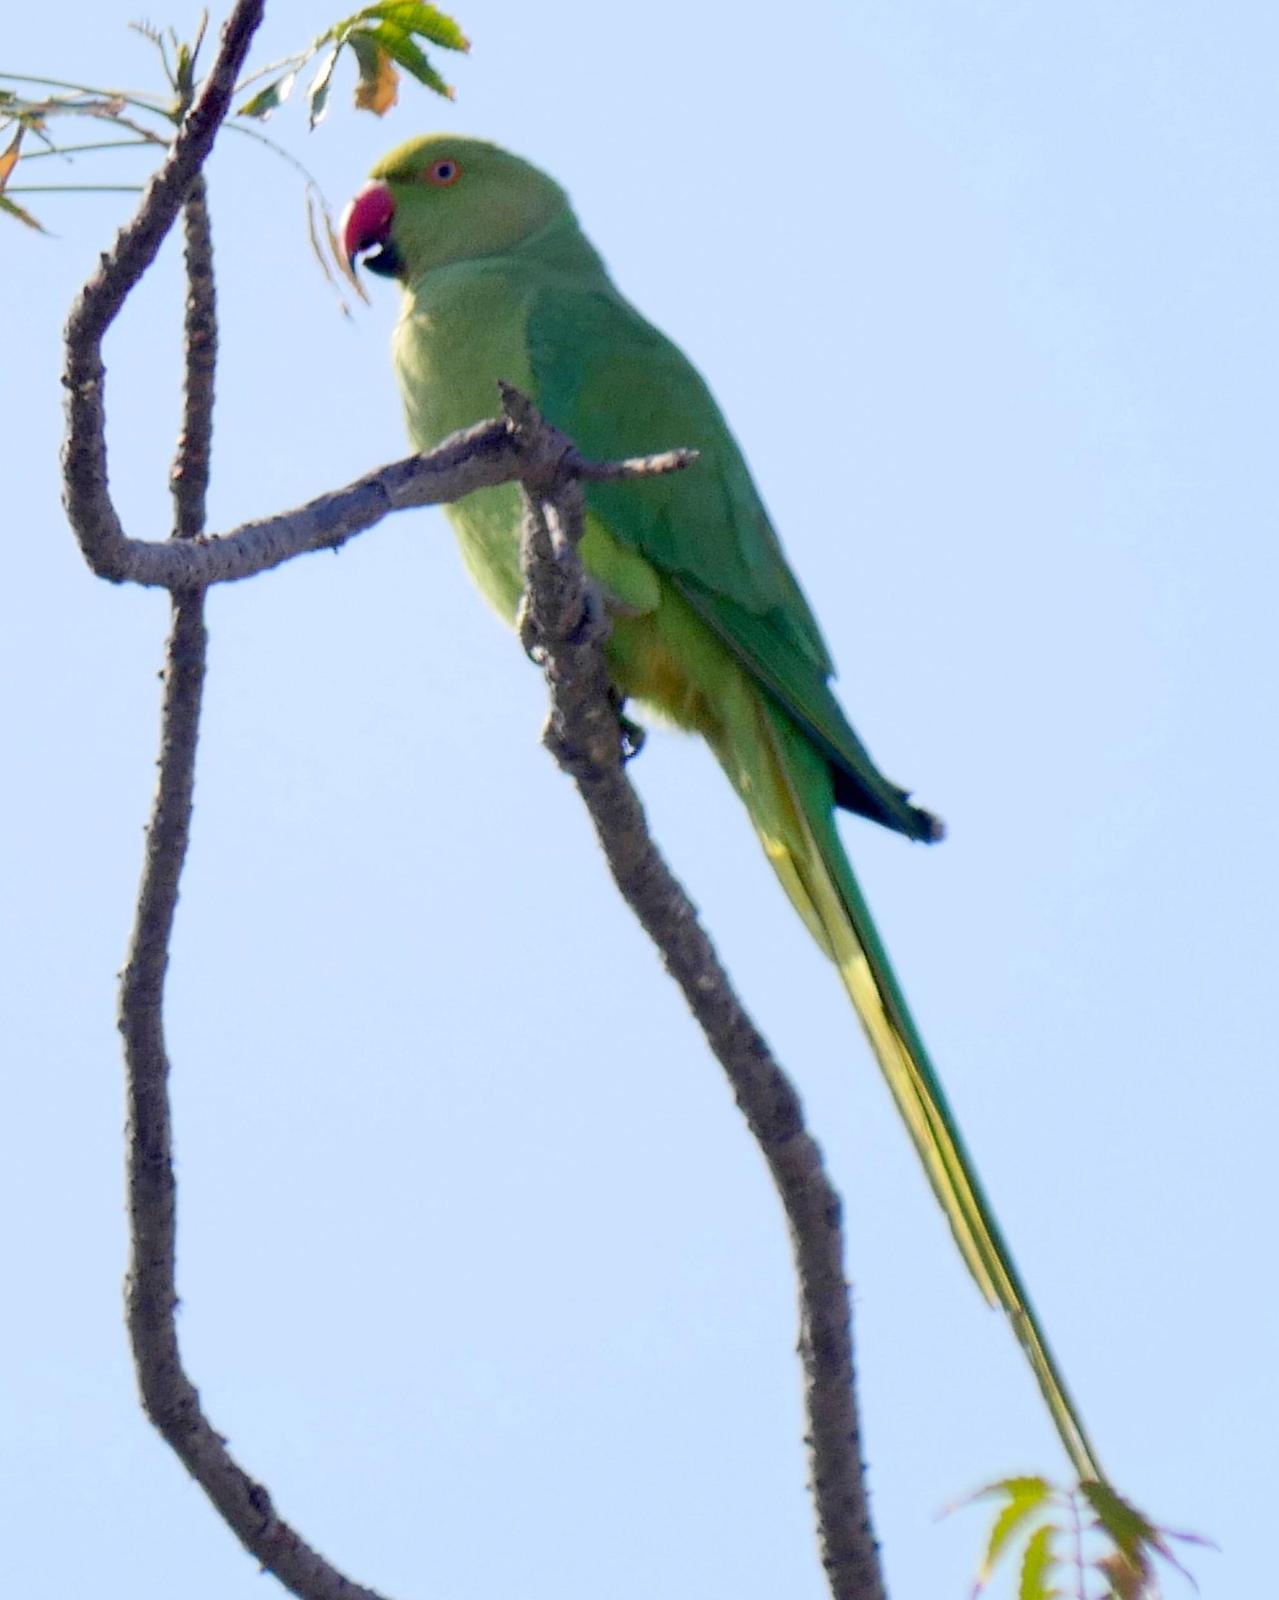 Rose-ringed Parakeet Photo by Peter Lowe